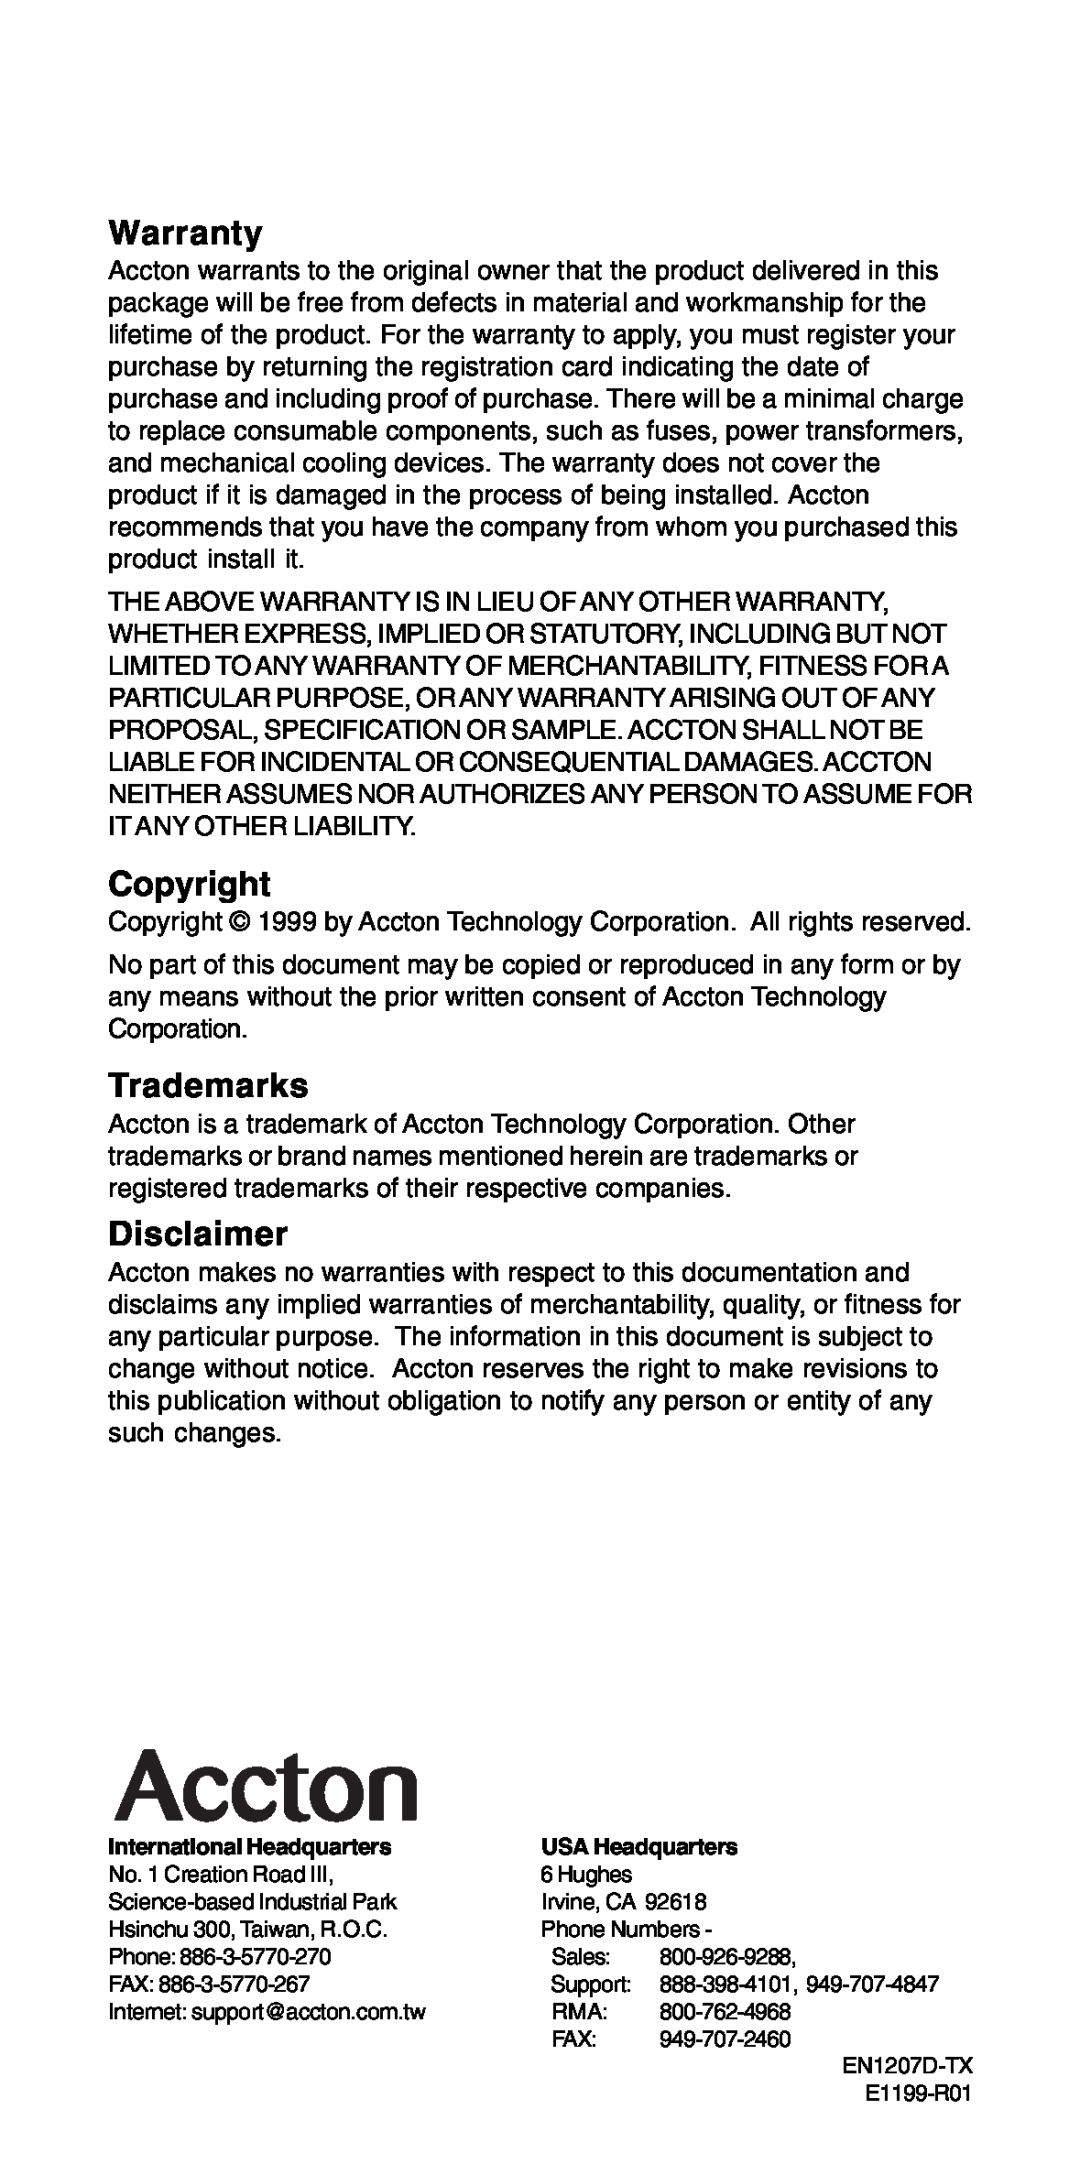 Accton Technology EN1207D-TX manual Warranty, Copyright, Trademarks, Disclaimer 